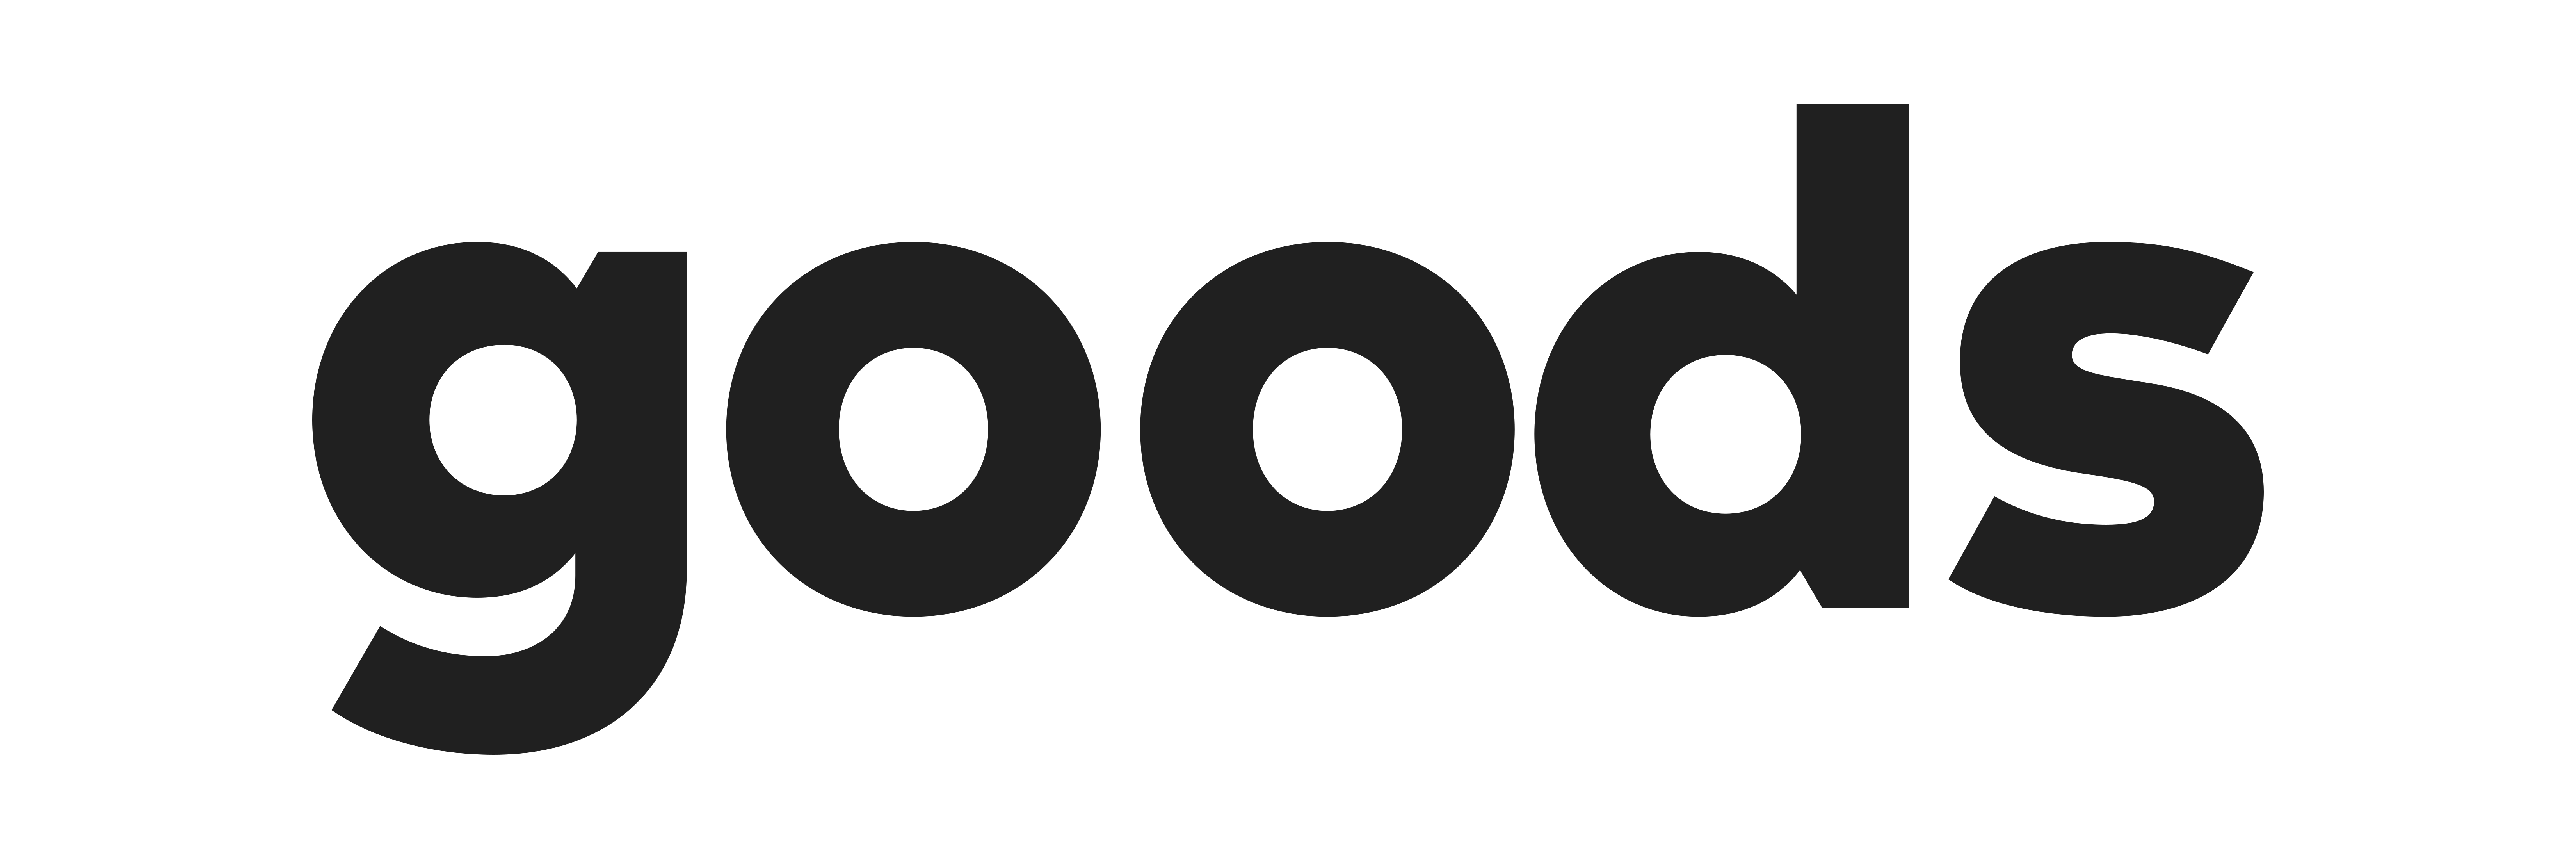 S good ru. Эмблема goods. Маркетплейс goods. Логотип интернет магазина.